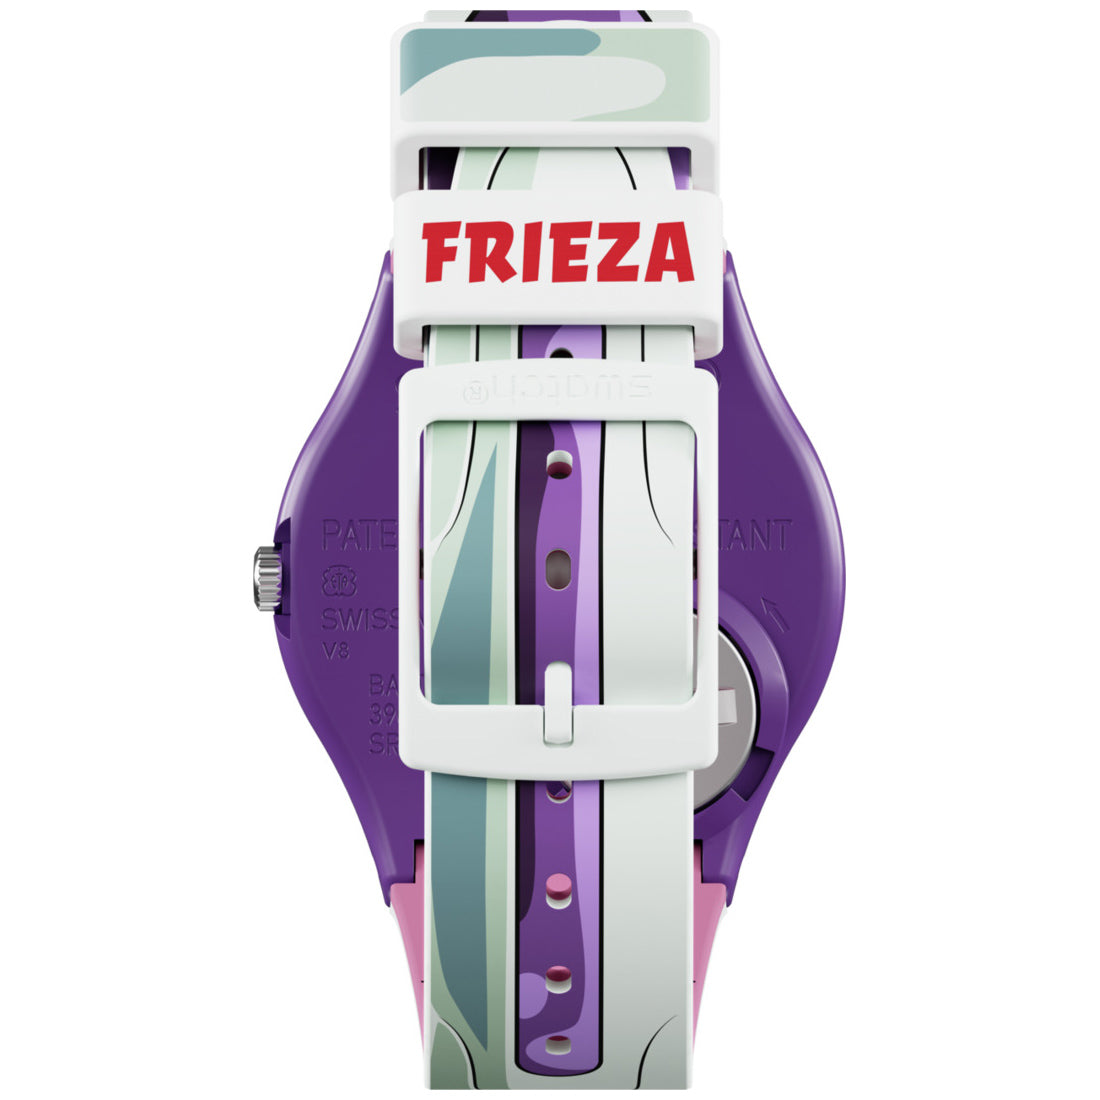 swatch スウォッチ ドラゴンボールZ コラボモデル フリーザ DRAGONBALL Z FRIEZA 腕時計 GZ359